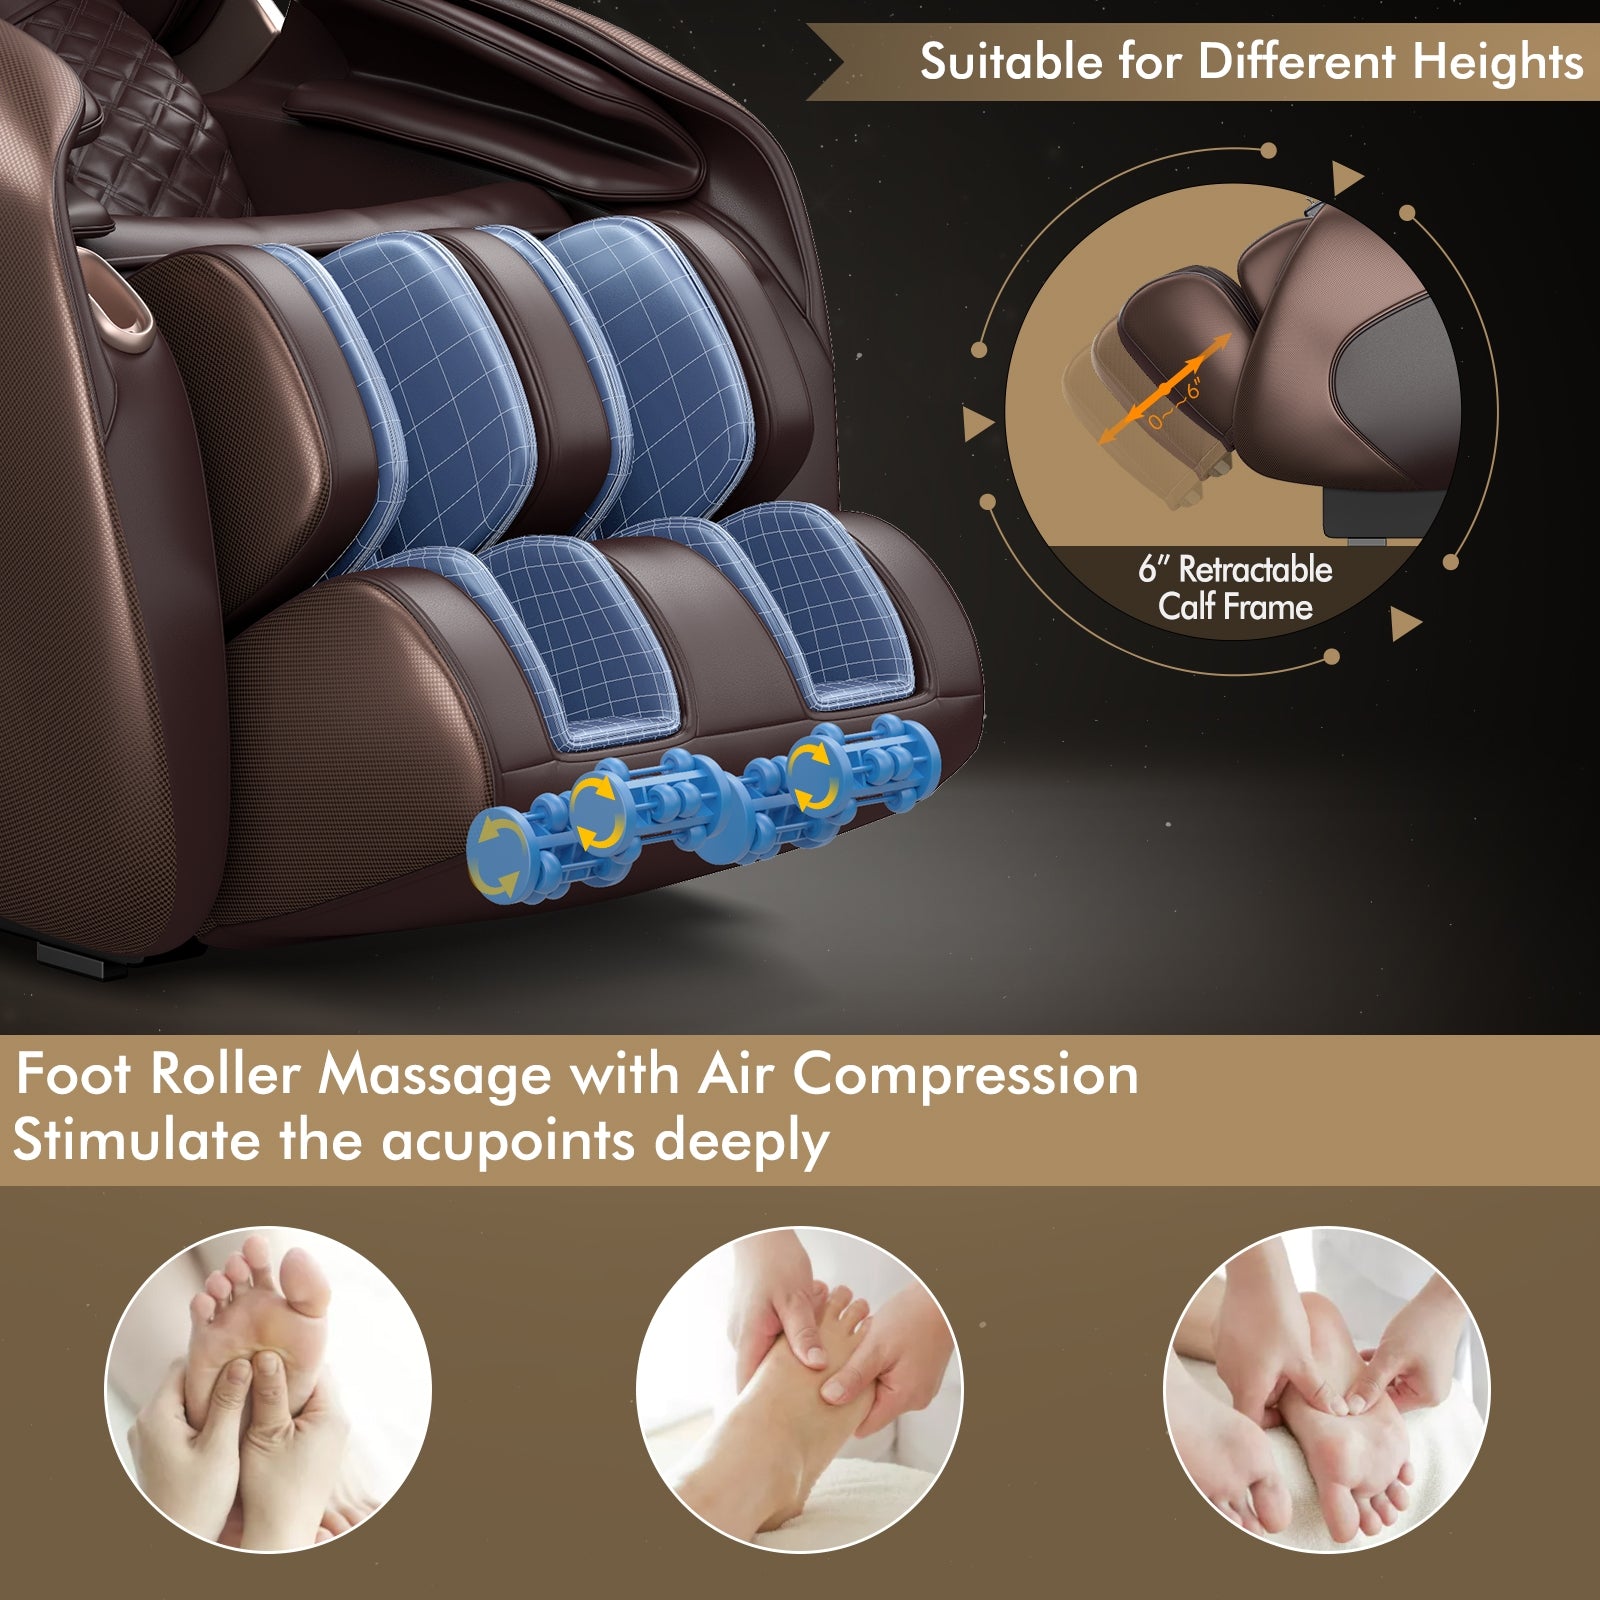 Full Body Zero Gravity Shiatsu Massage Chair with Built-In Heat Therapy System